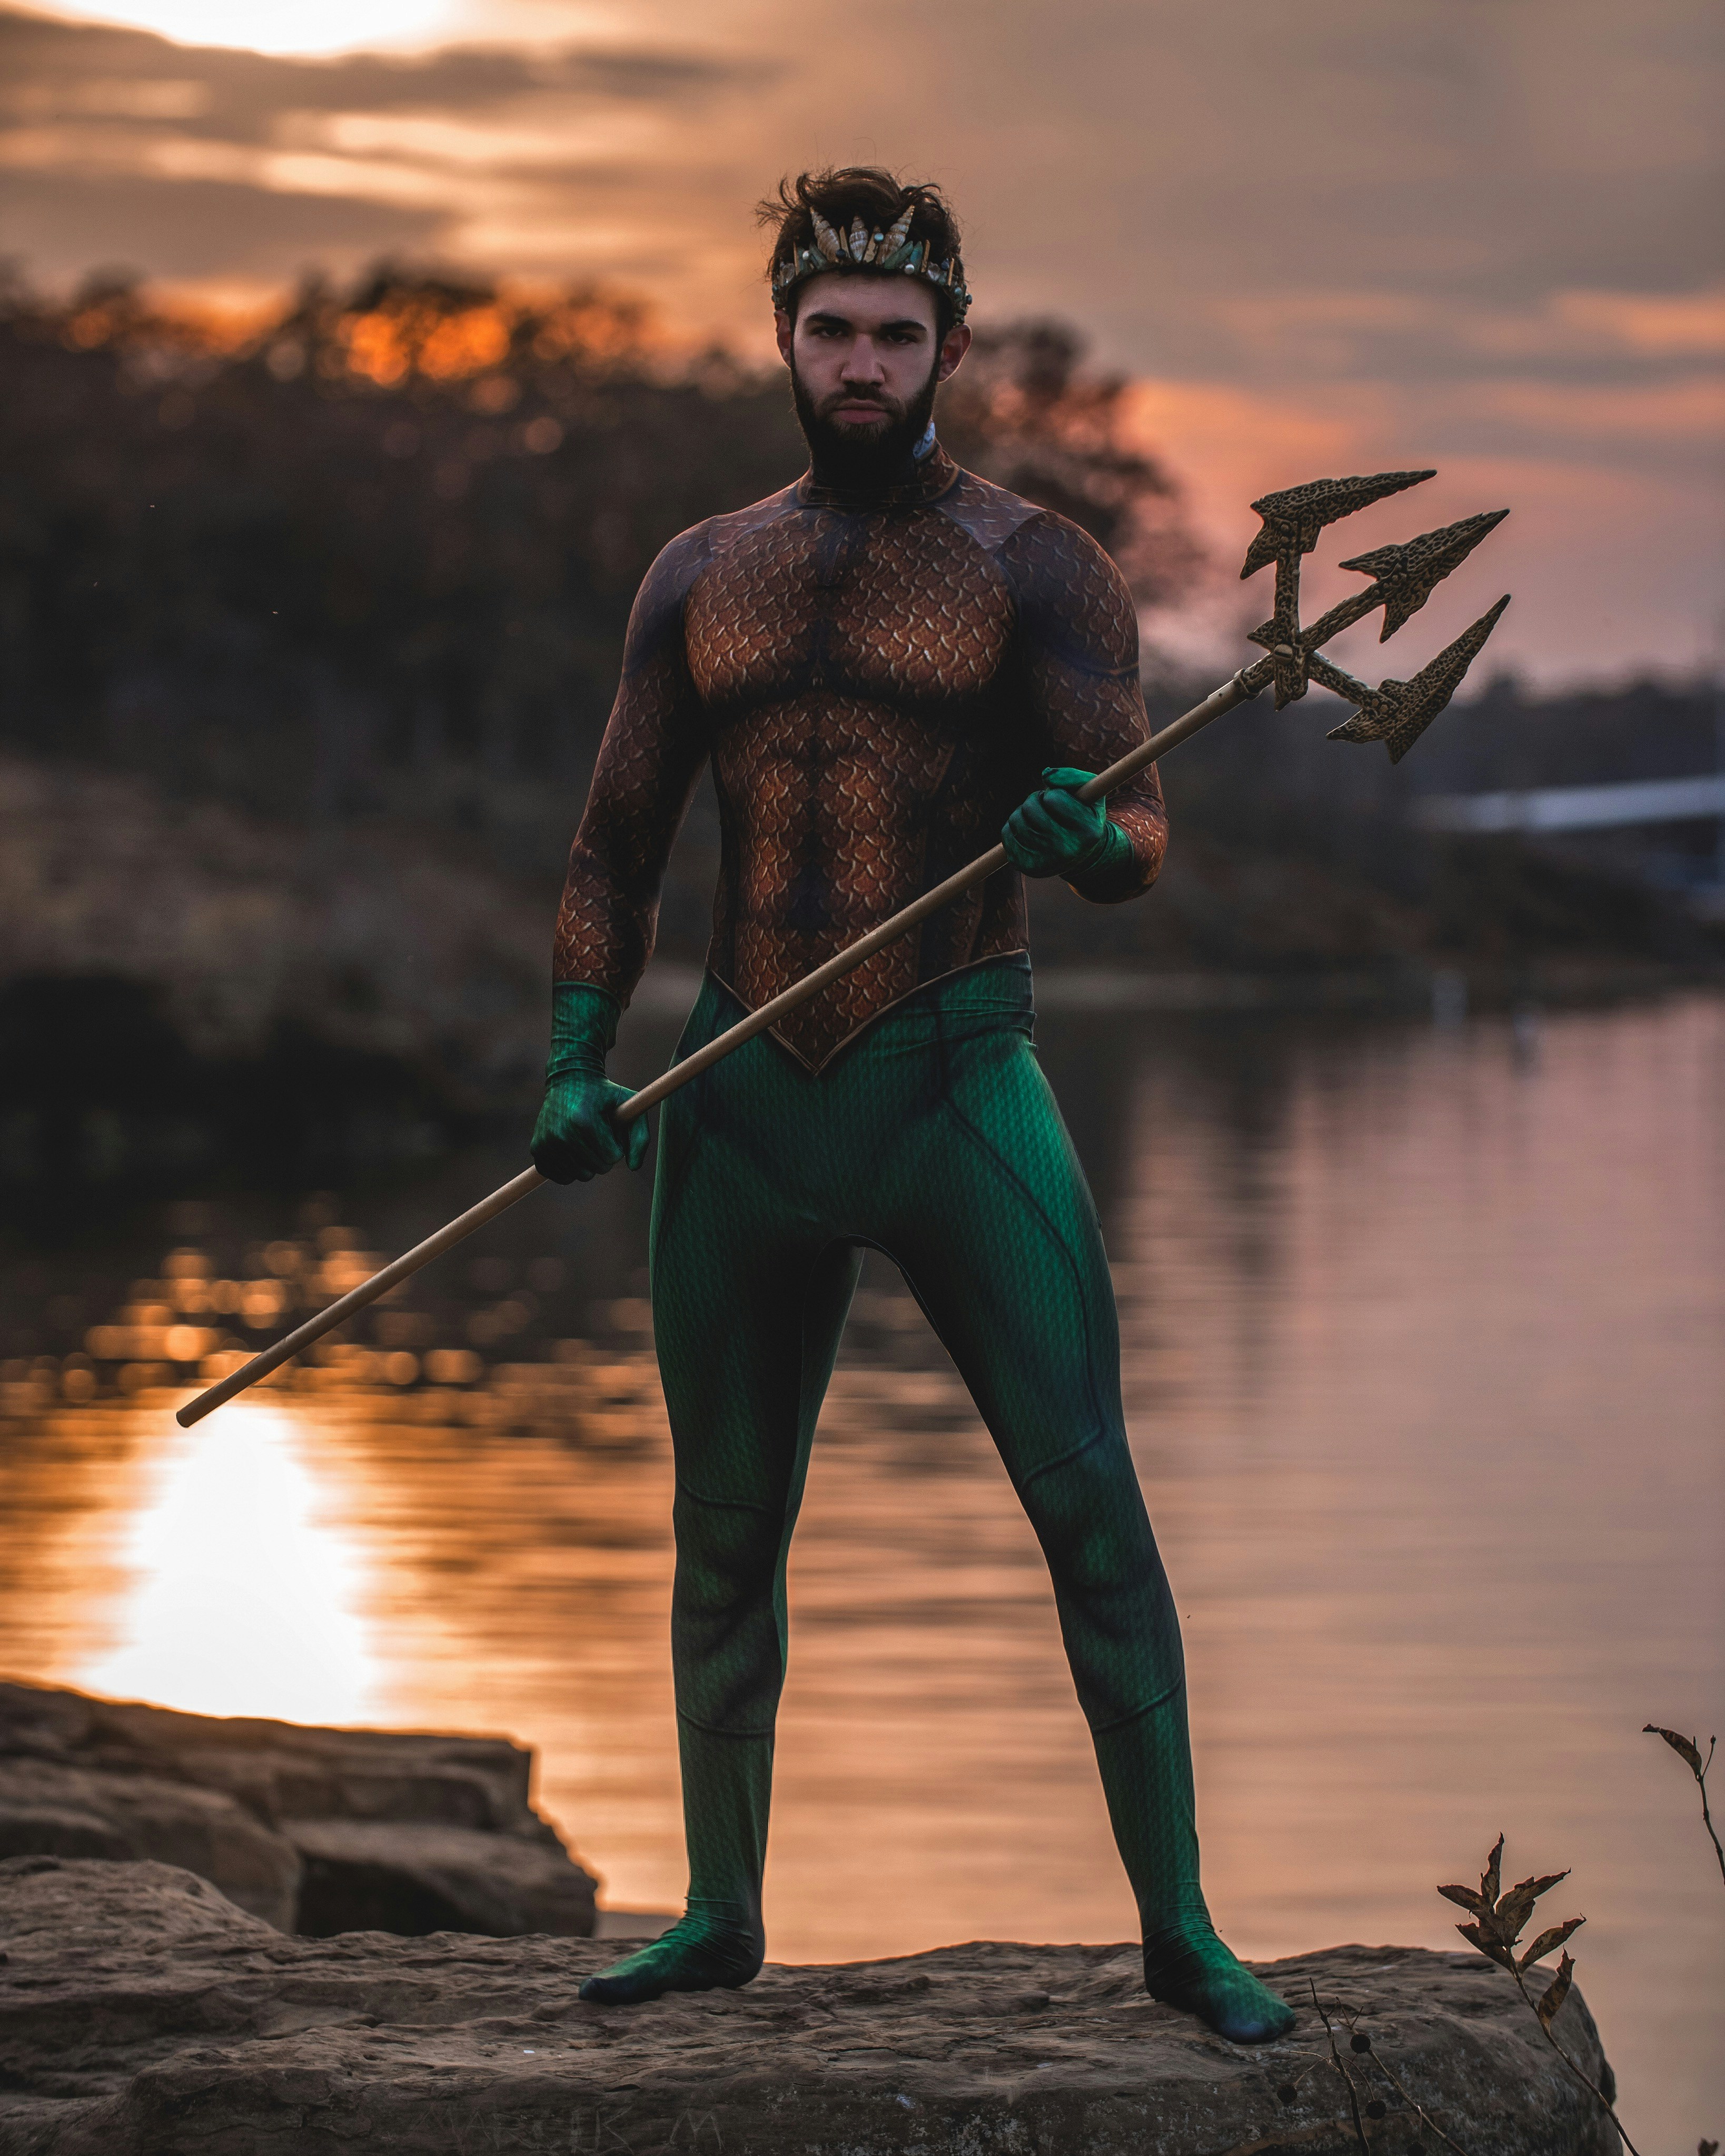 Man wearing Poseidon costume standing on rock photo – Free Marvel Image on Unsplash